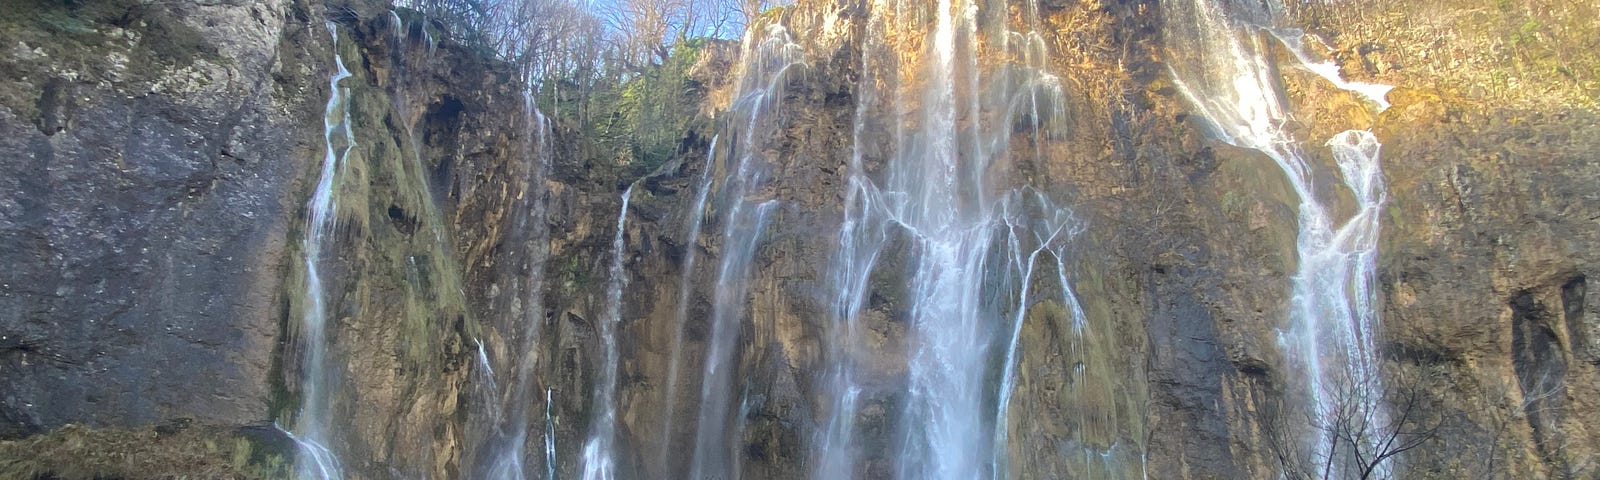 Waterfalls at Plitvice National Park, Croatia